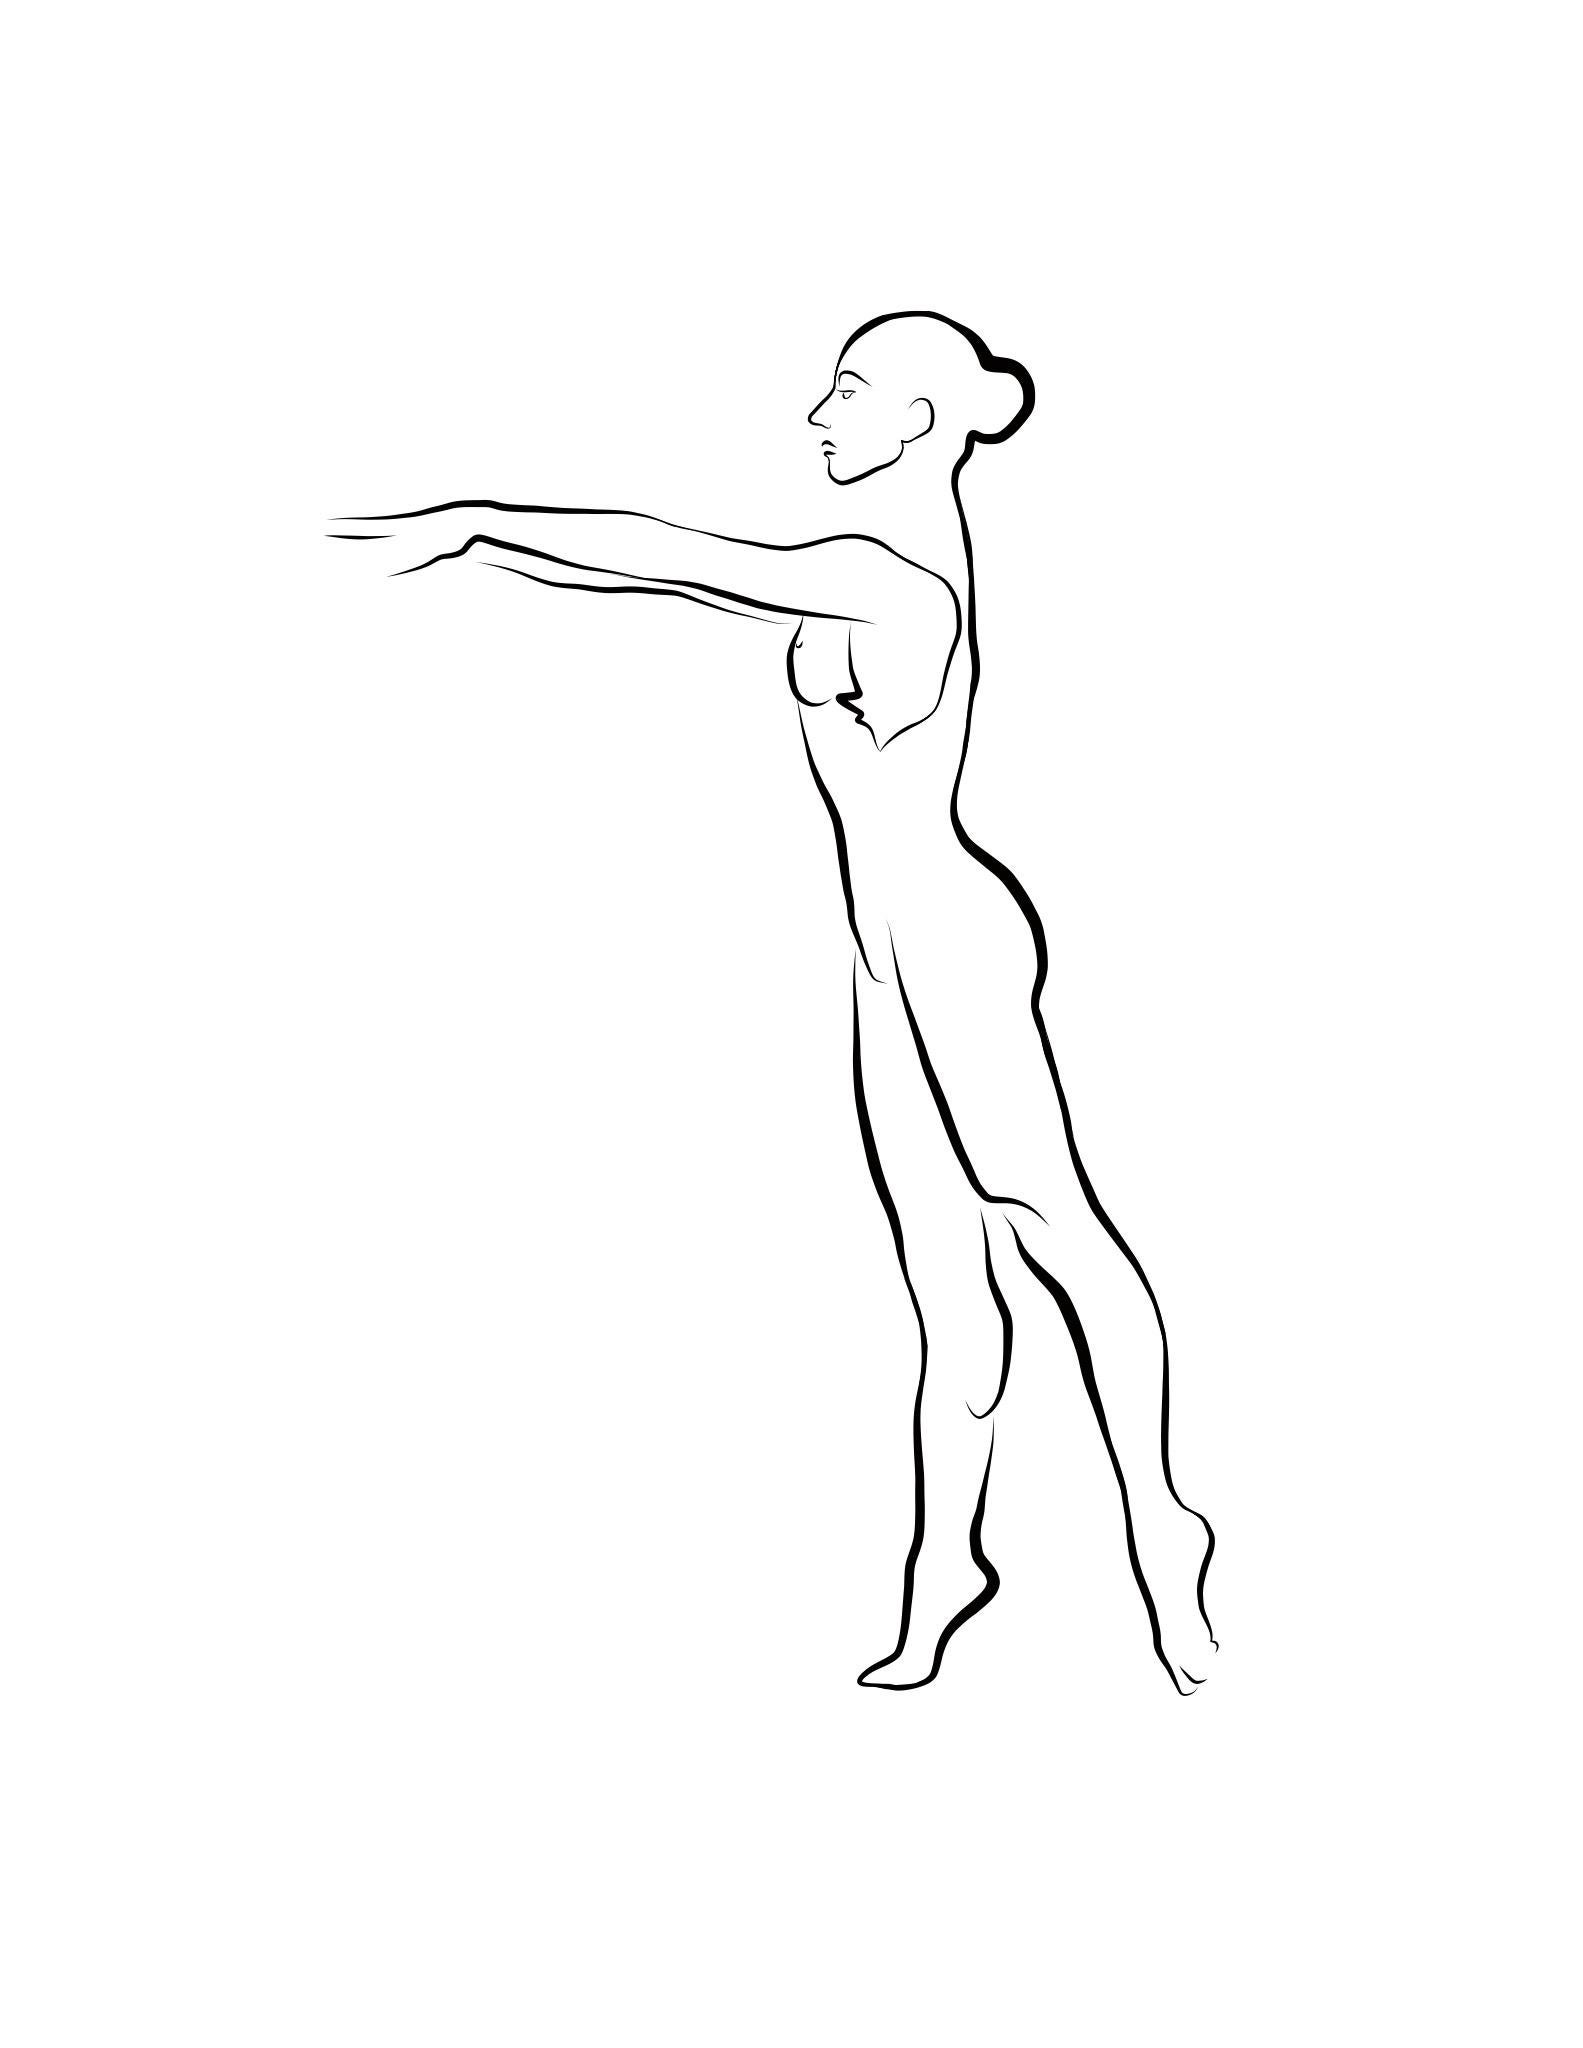 Michael Binkley Nude Print – Haiku #61 - Digital Vector Drawing B&W Weiblicher Akt Stehend Zehenspitzen